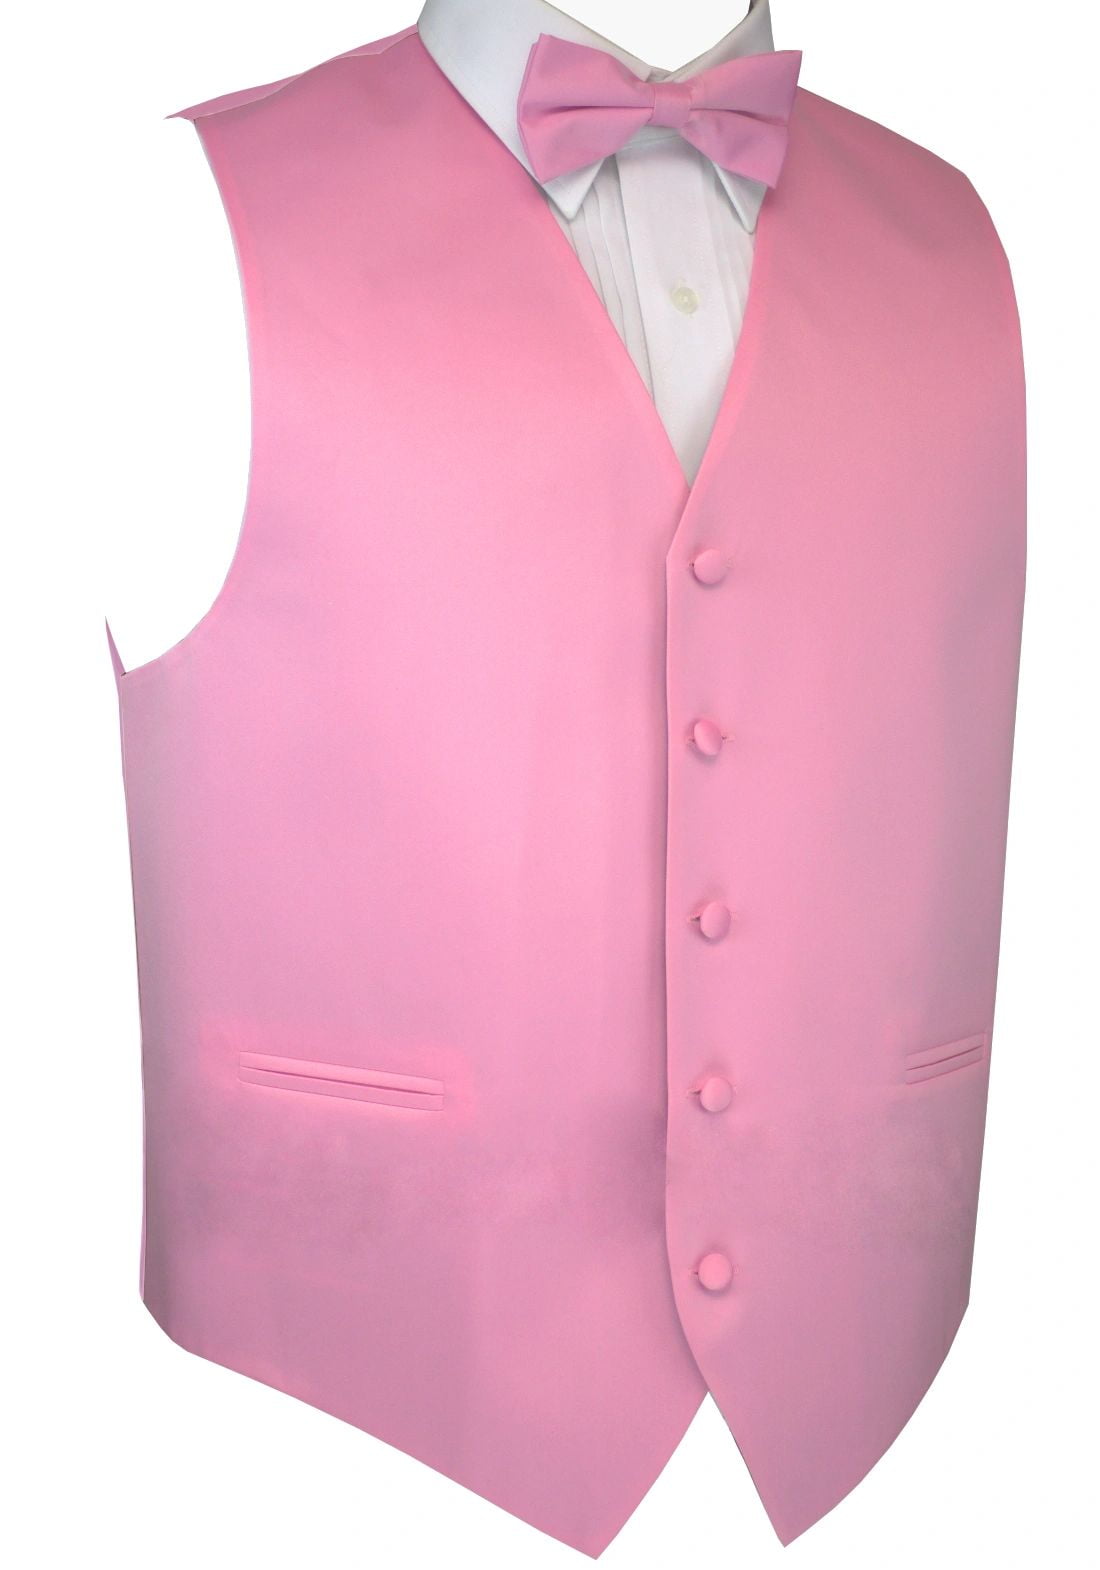 New Men's Tuxedo Vest Vertical Stripes Necktie Bowtie & Hankie set Hot Pink 